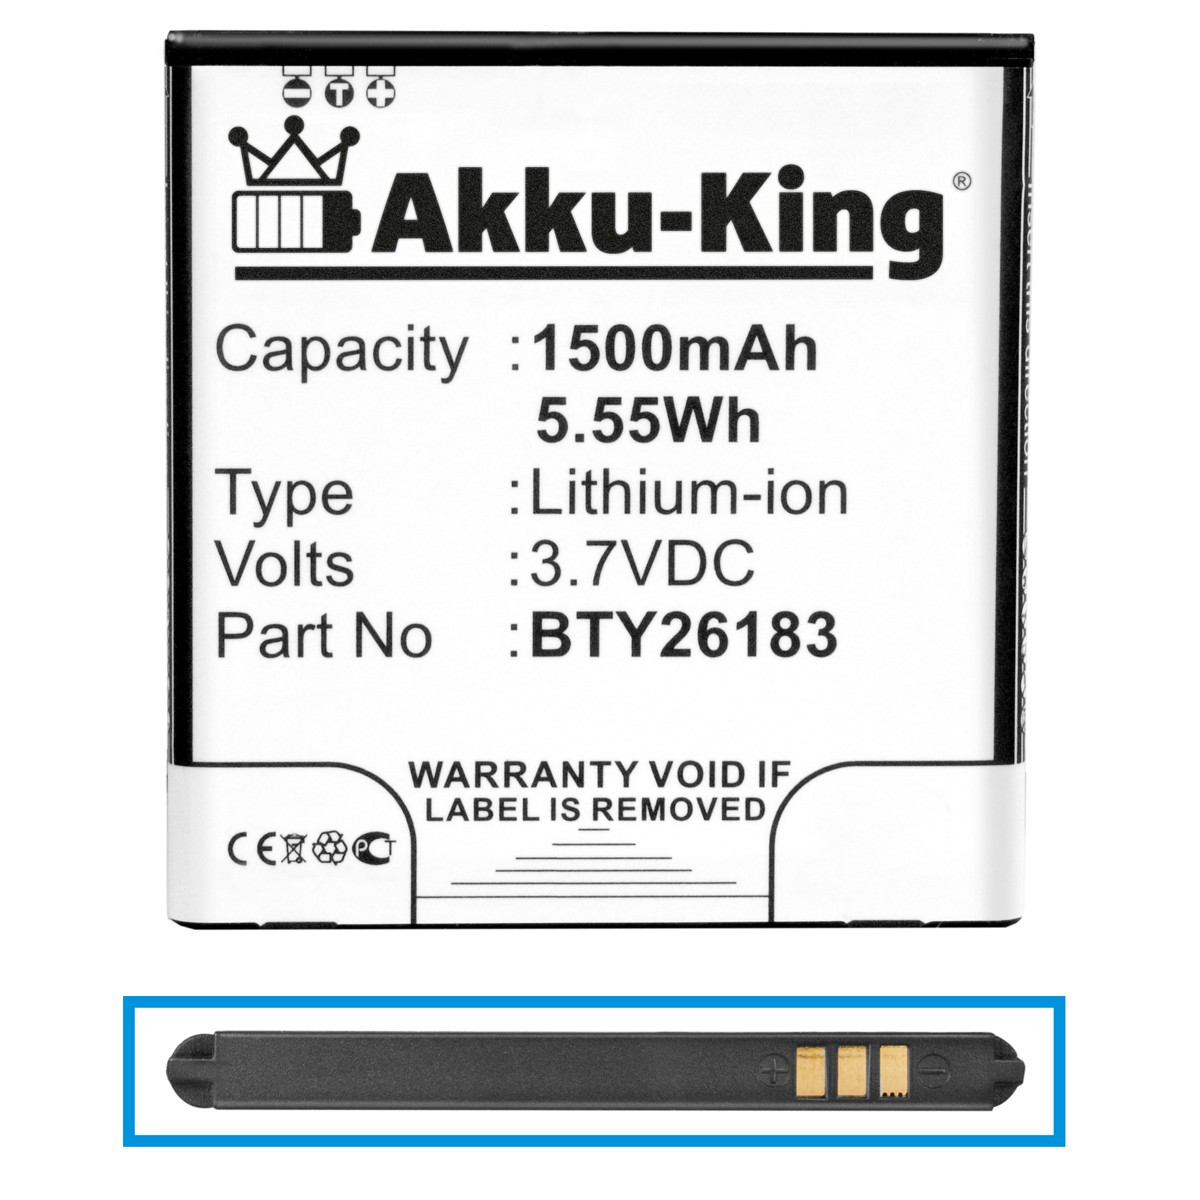 BTY26183 3.7 Volt, Handy-Akku, mit Elson 1500mAh kompatibel Akku Li-Ion AKKU-KING